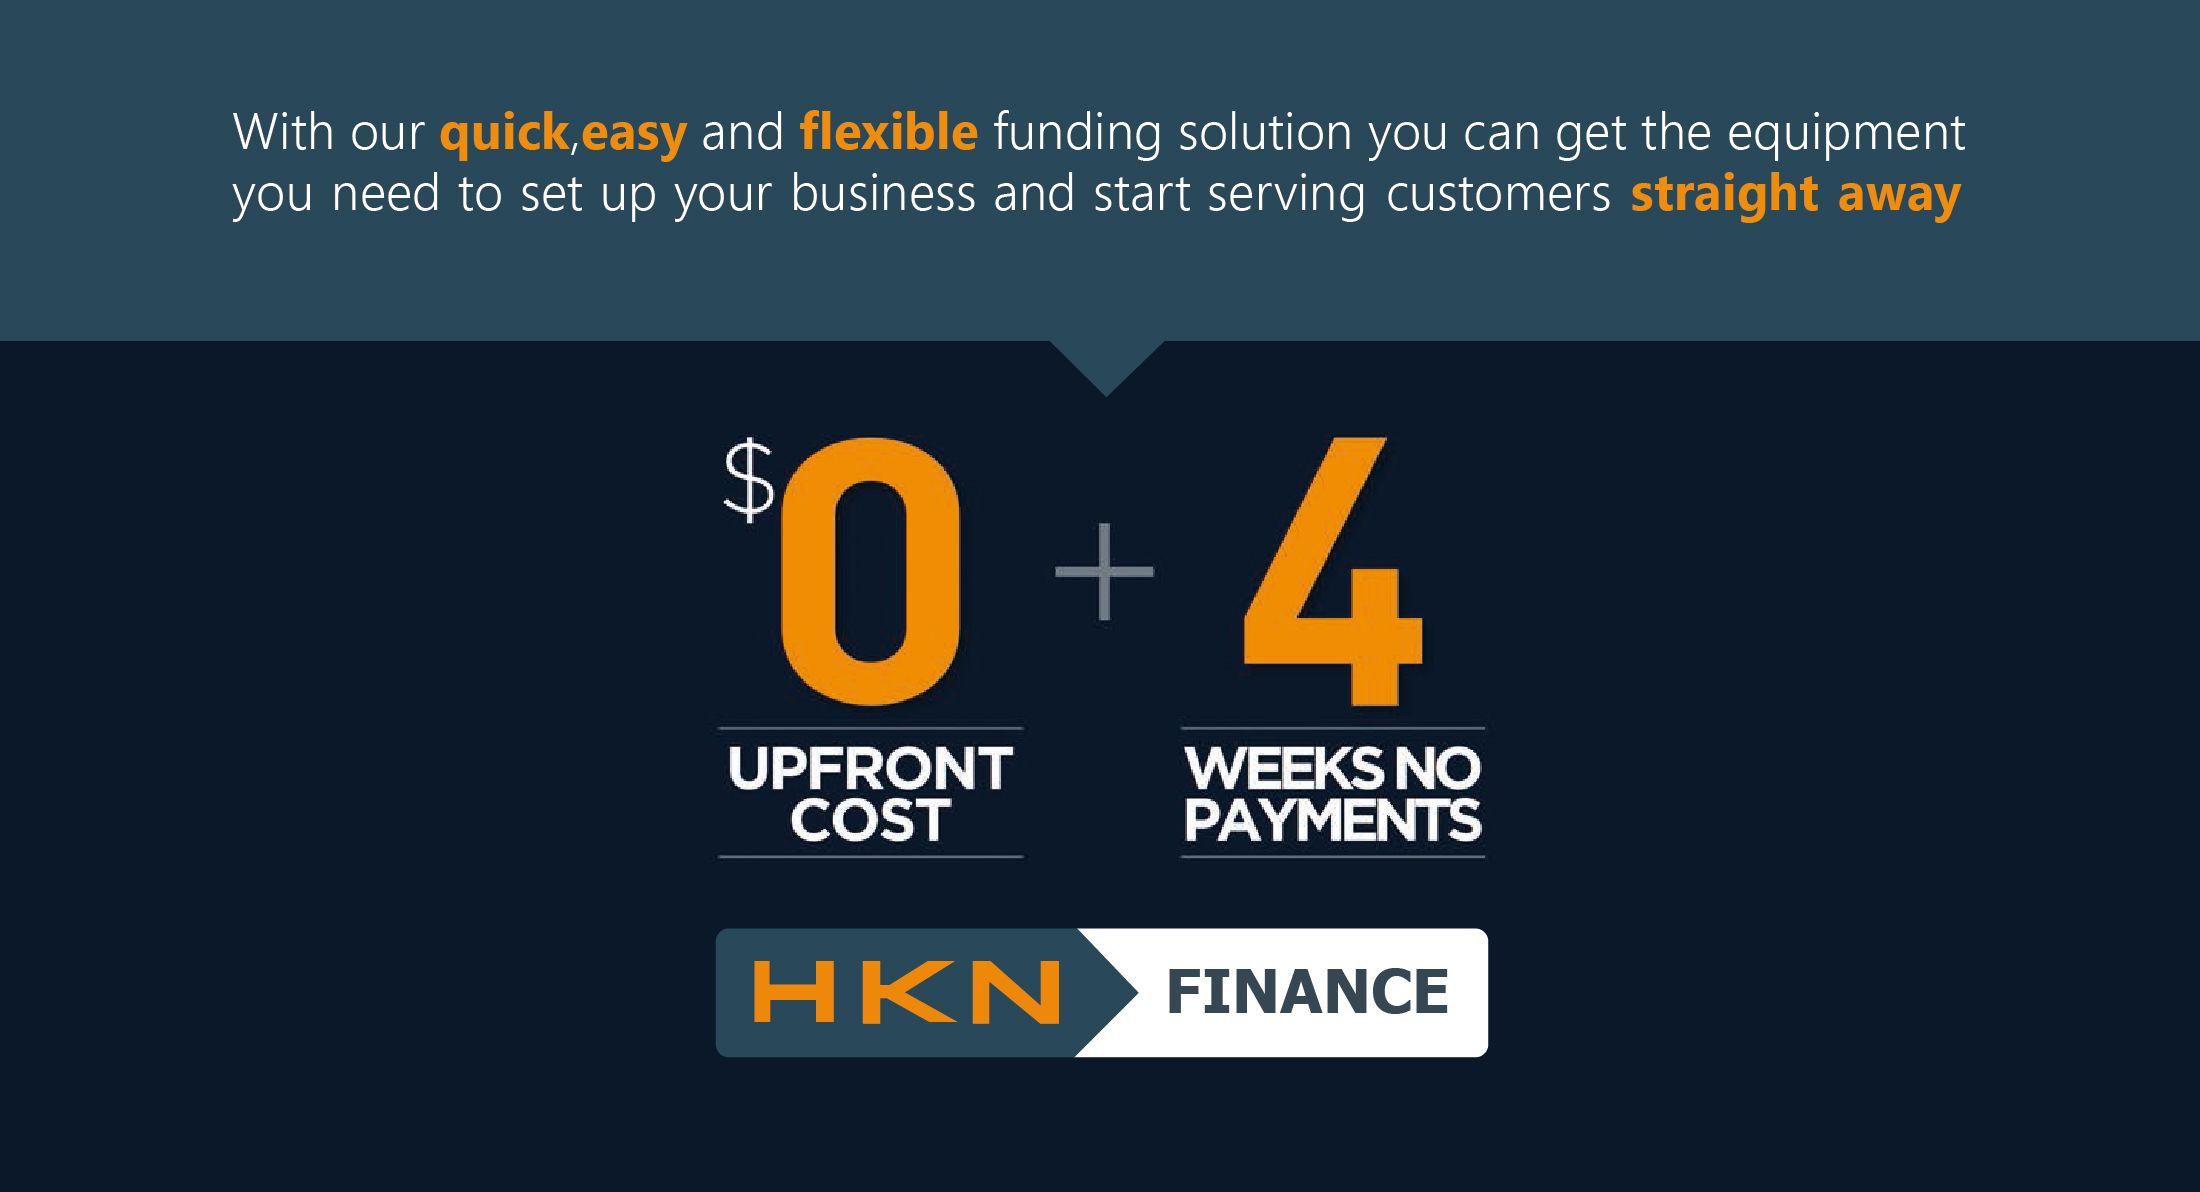 Hkn Logo - HKN Finance normal with logo - HKN